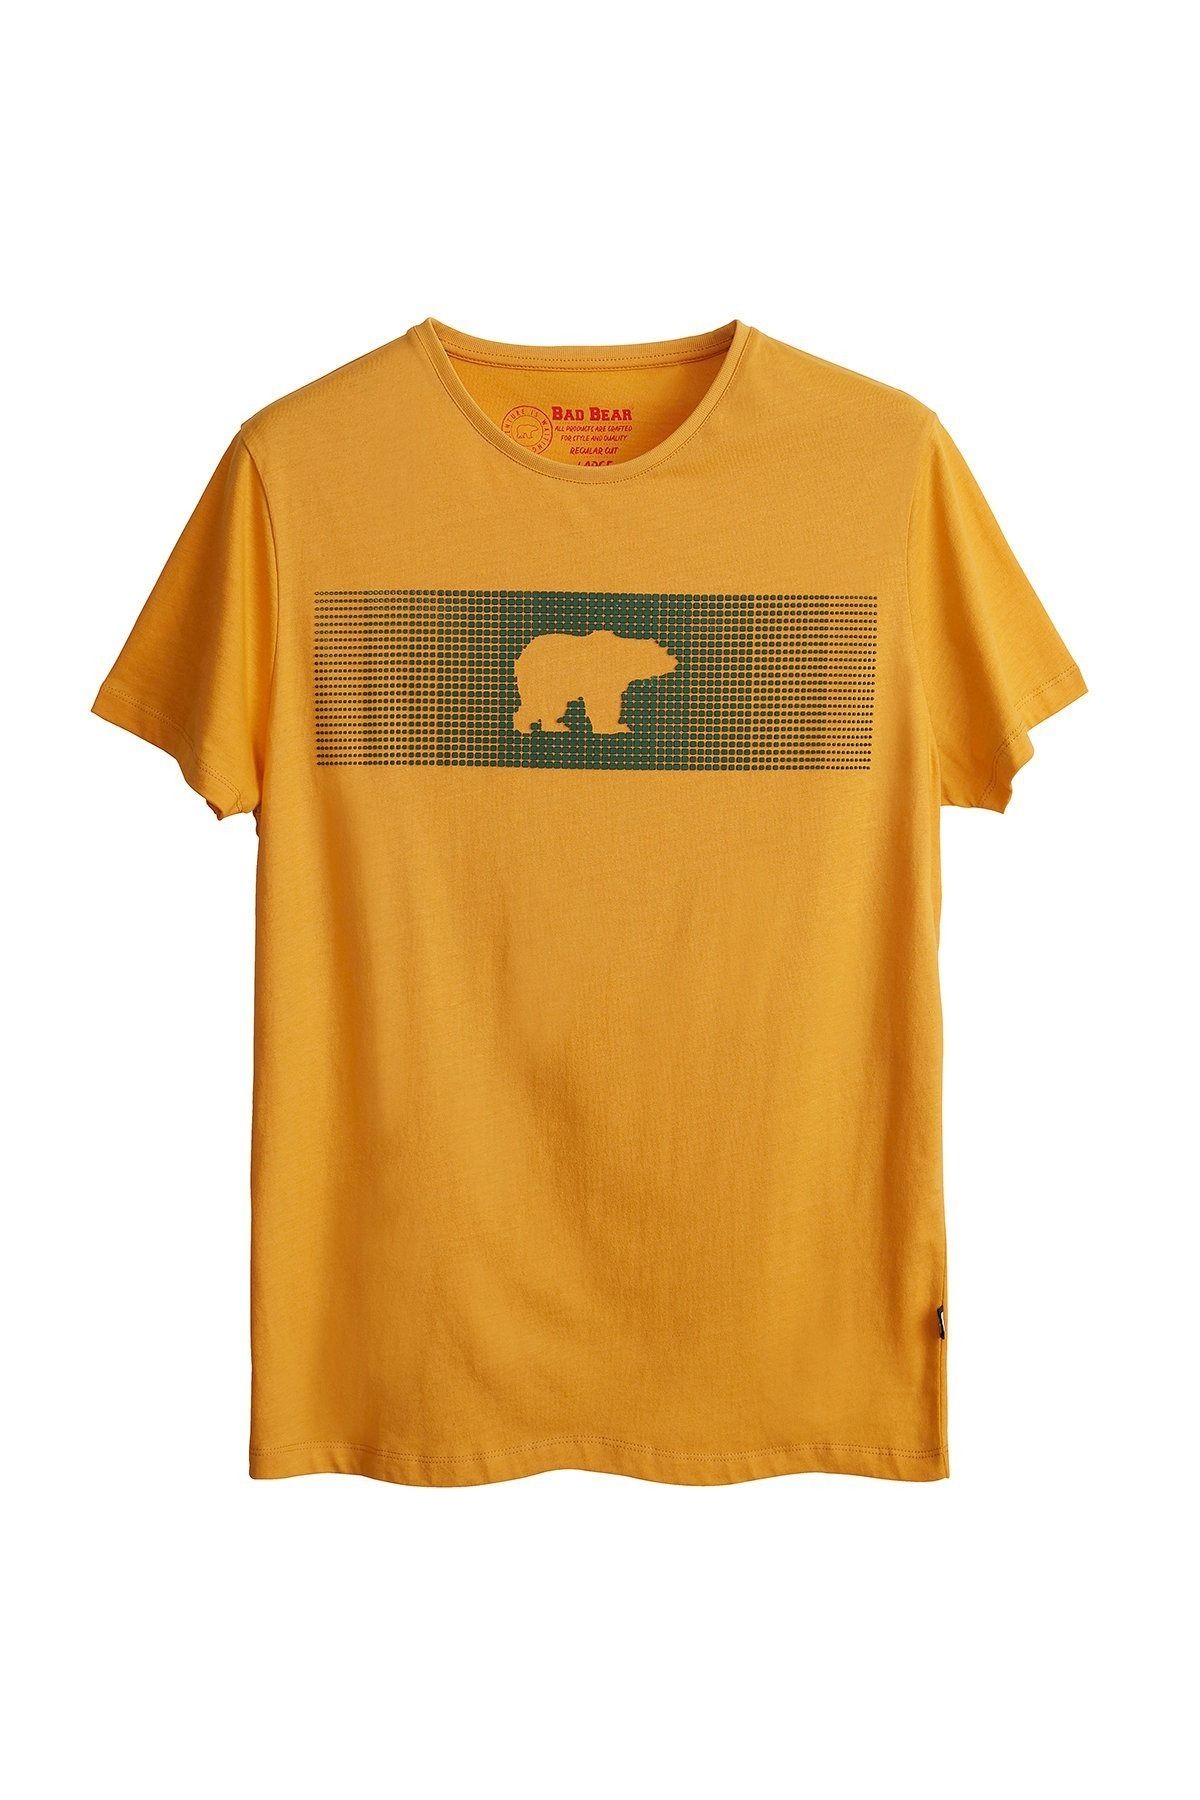 Bad Bear Fancy Erkek T-shirt 20.01.07.024 Gınger